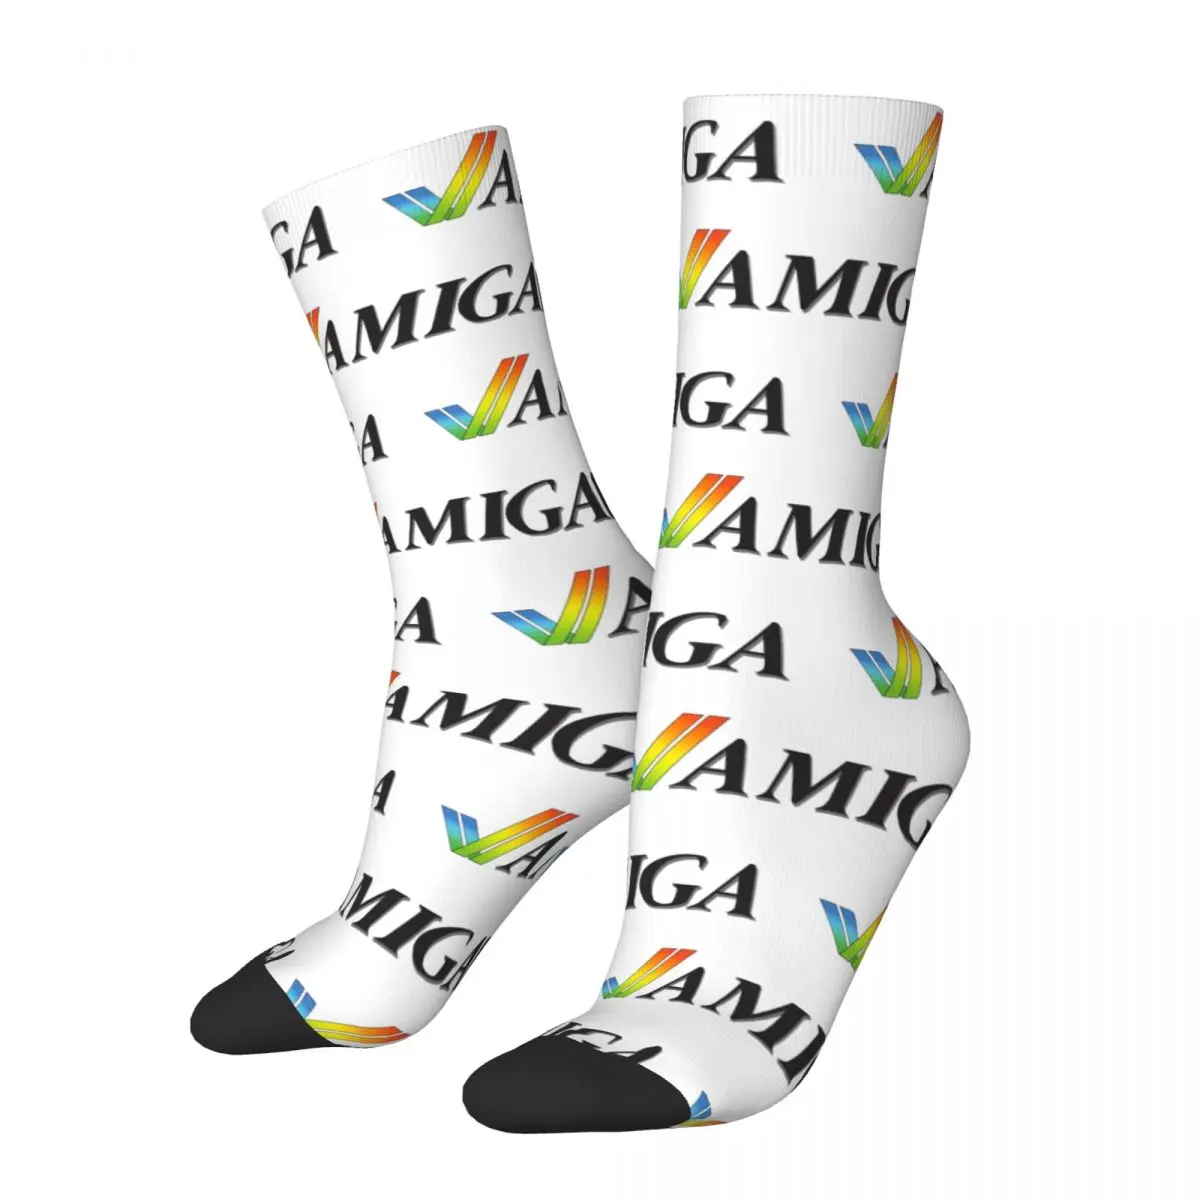 

Men Amiga Retro Computing Socks Super Soft Fashion Commodore 64 Socks Harajuku Merchandise Middle TubeSocks Little Small Gifts